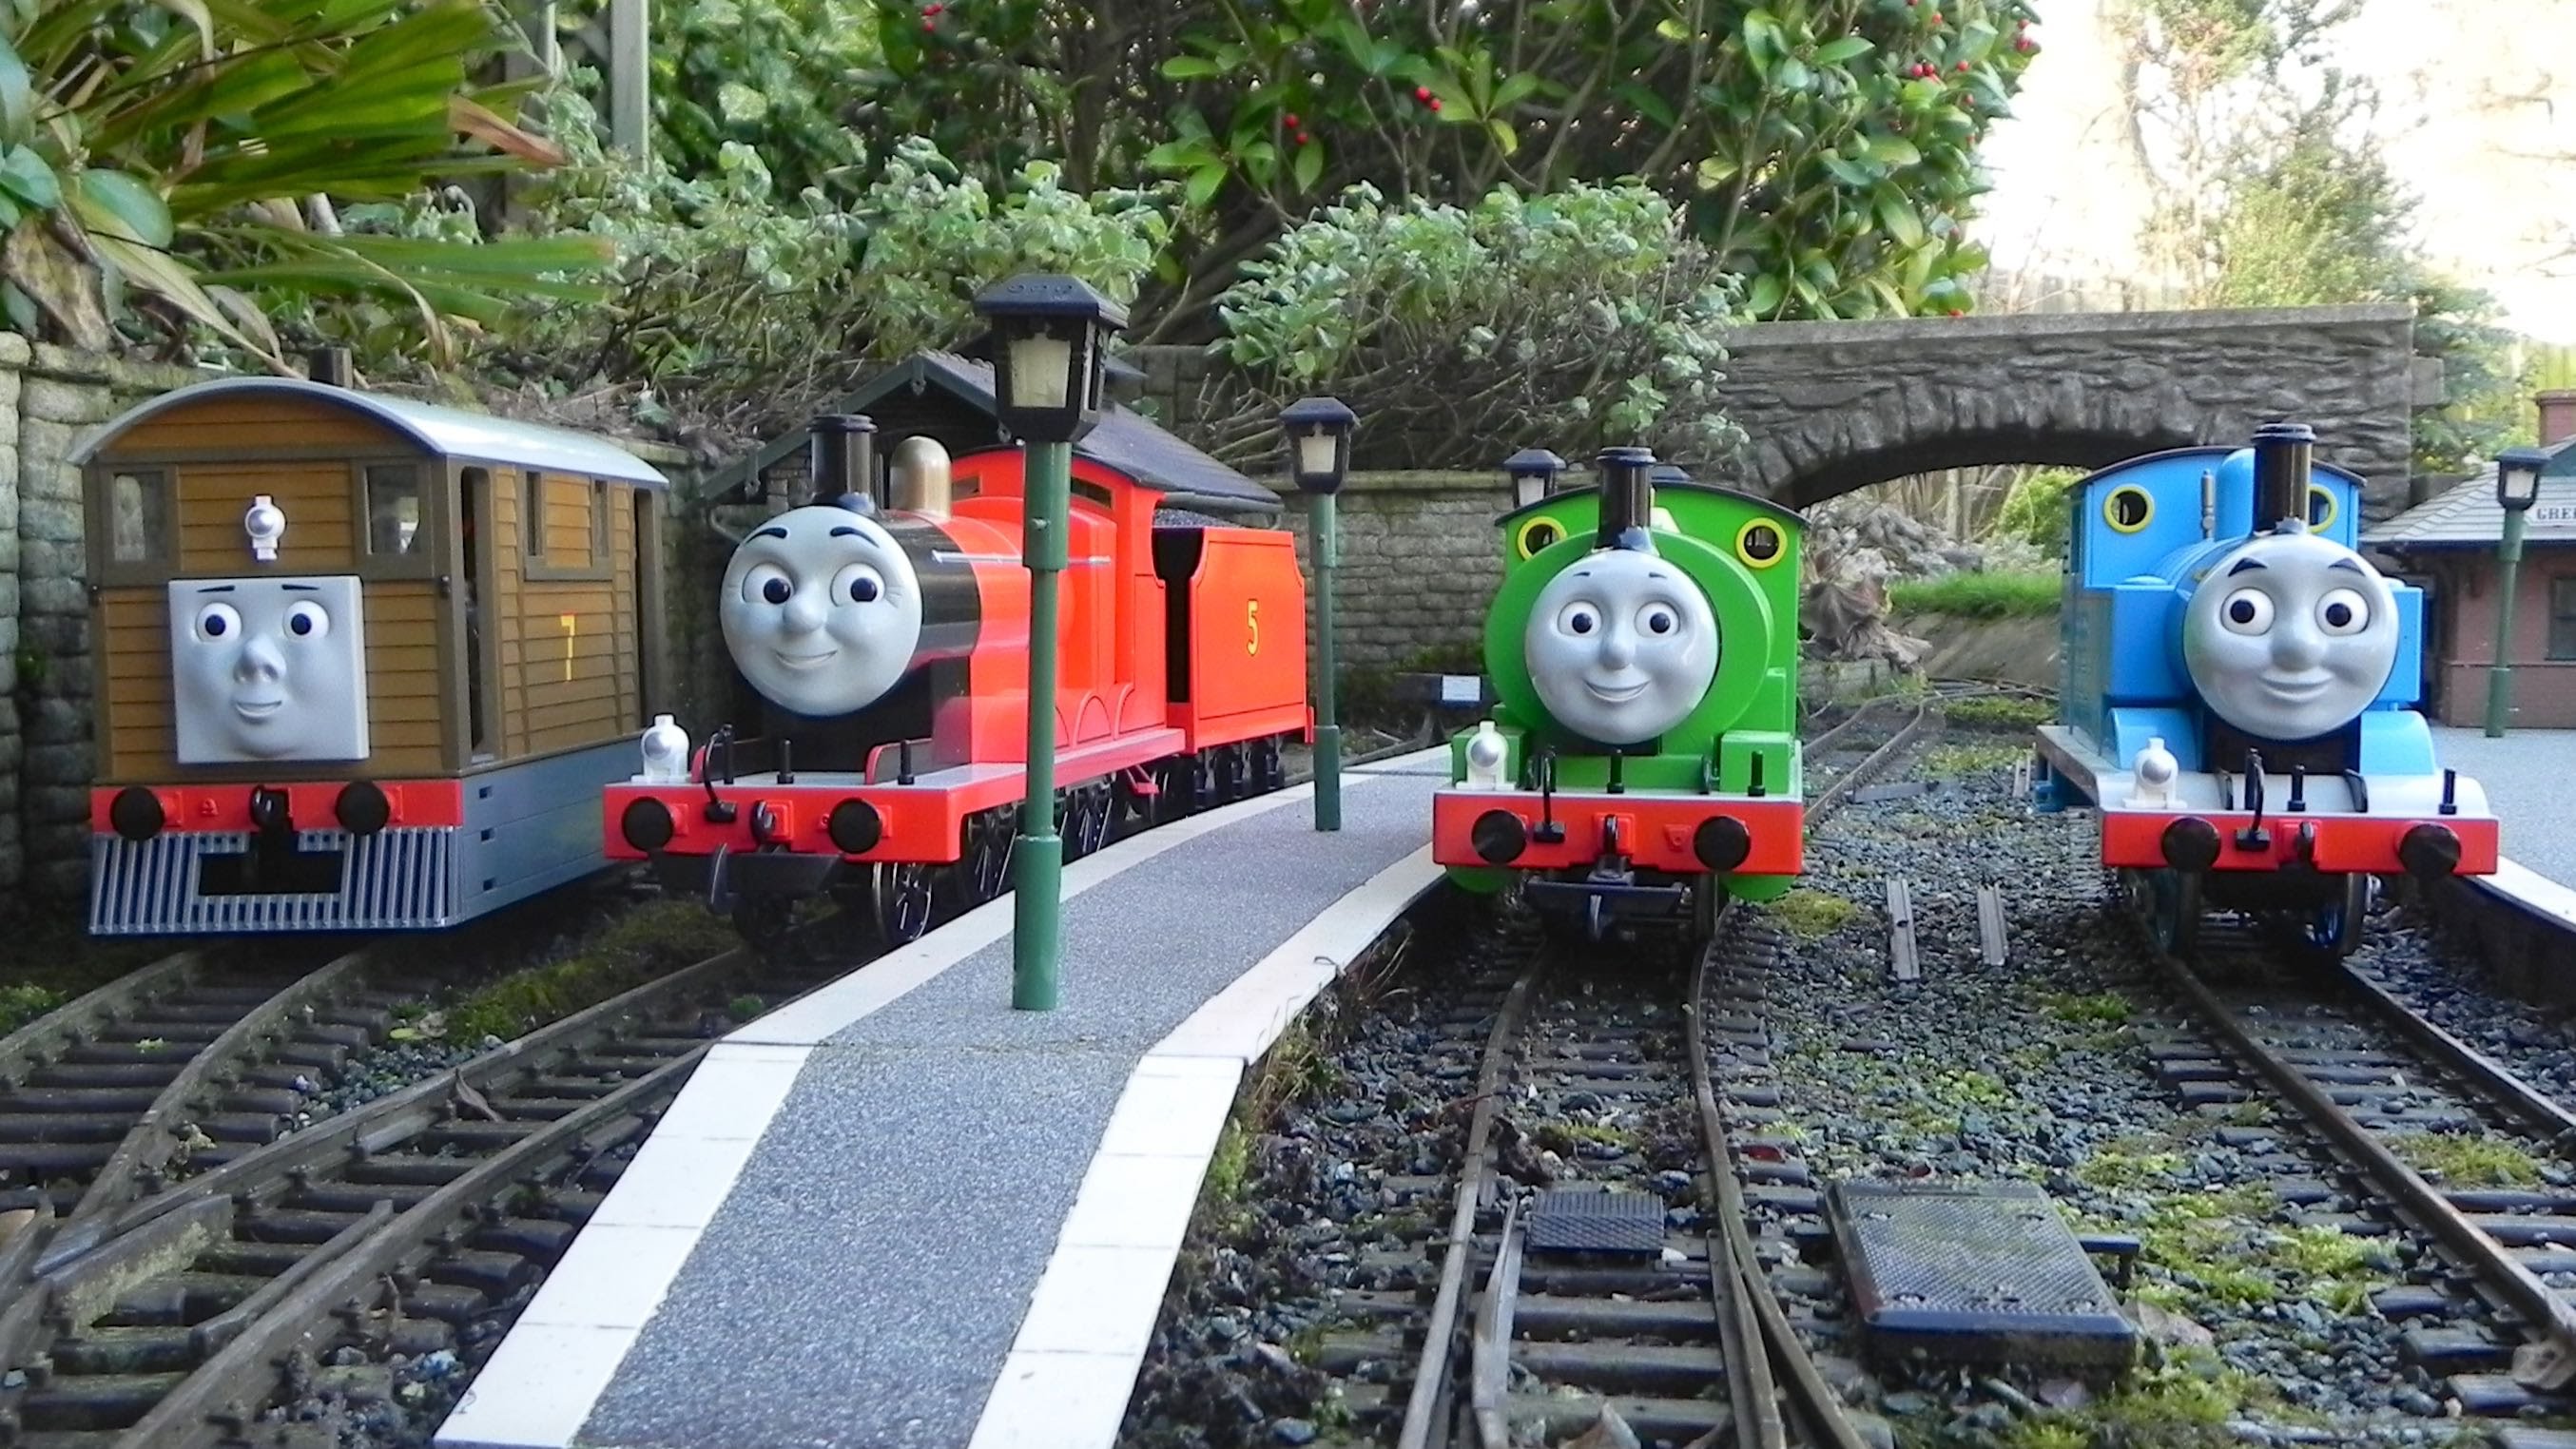 Thomas The Tank Engine & Friends #7